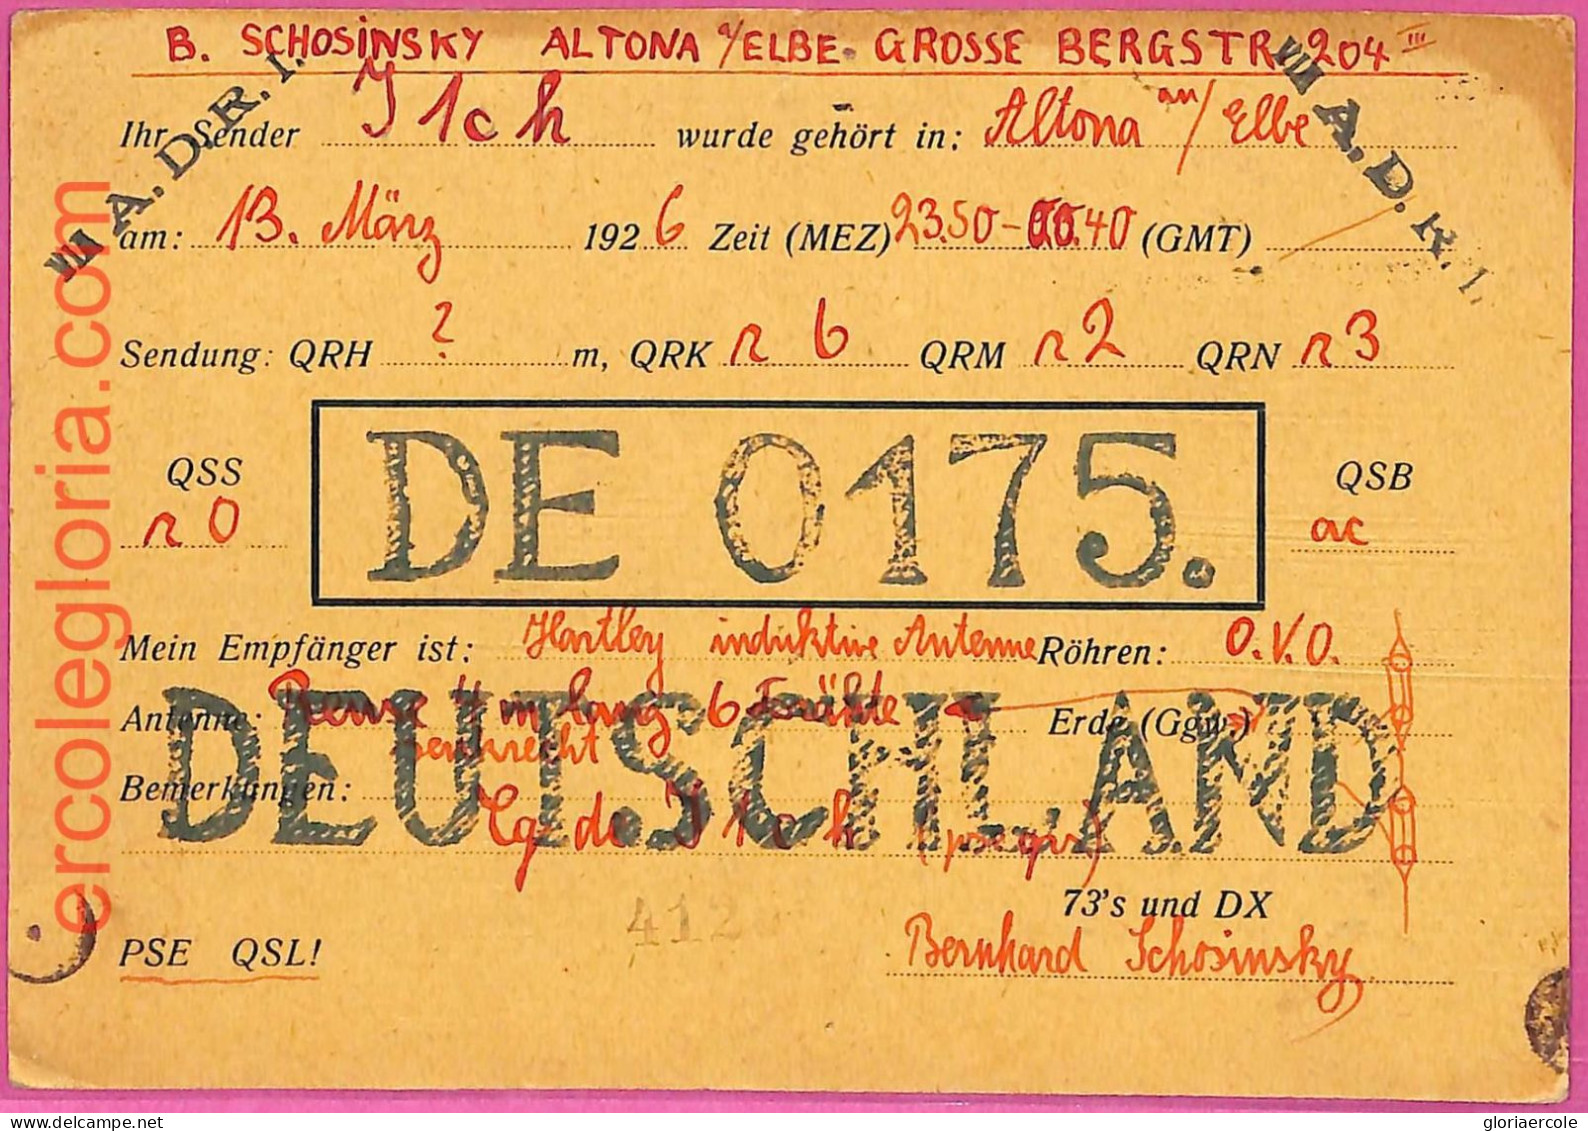 Af8365 - Deutschland GERMANY - RADIO CARD - Hamburg,Altona - 1920's - Radio